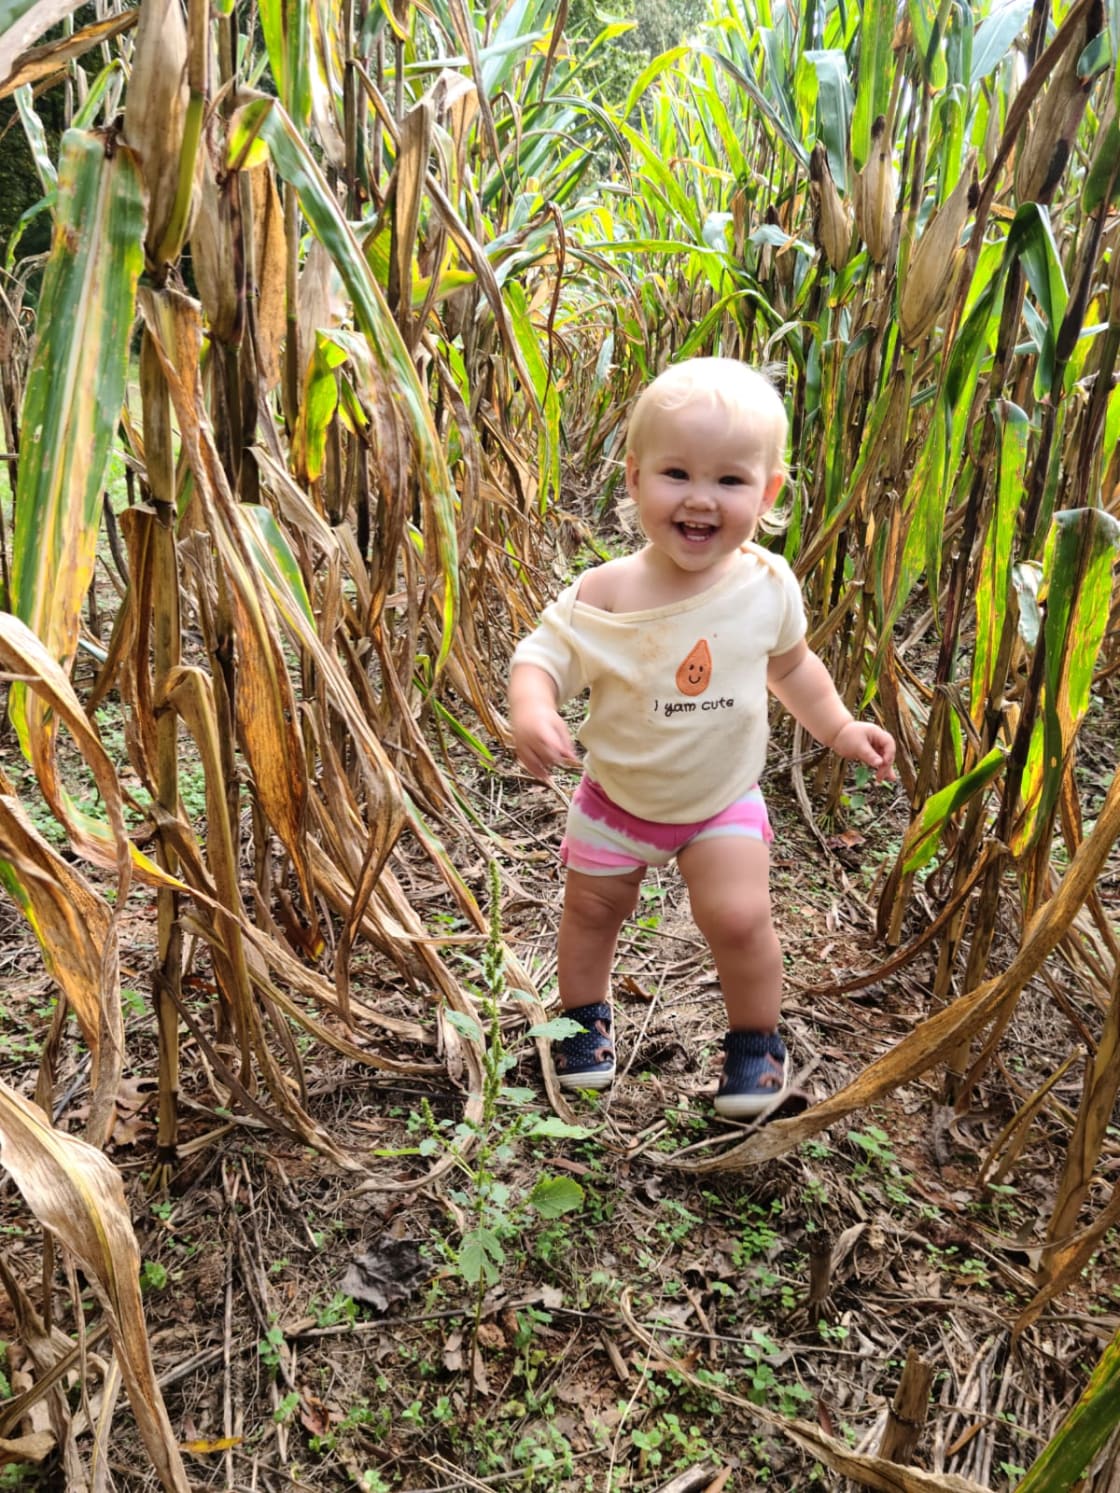 Exploring the corn fields